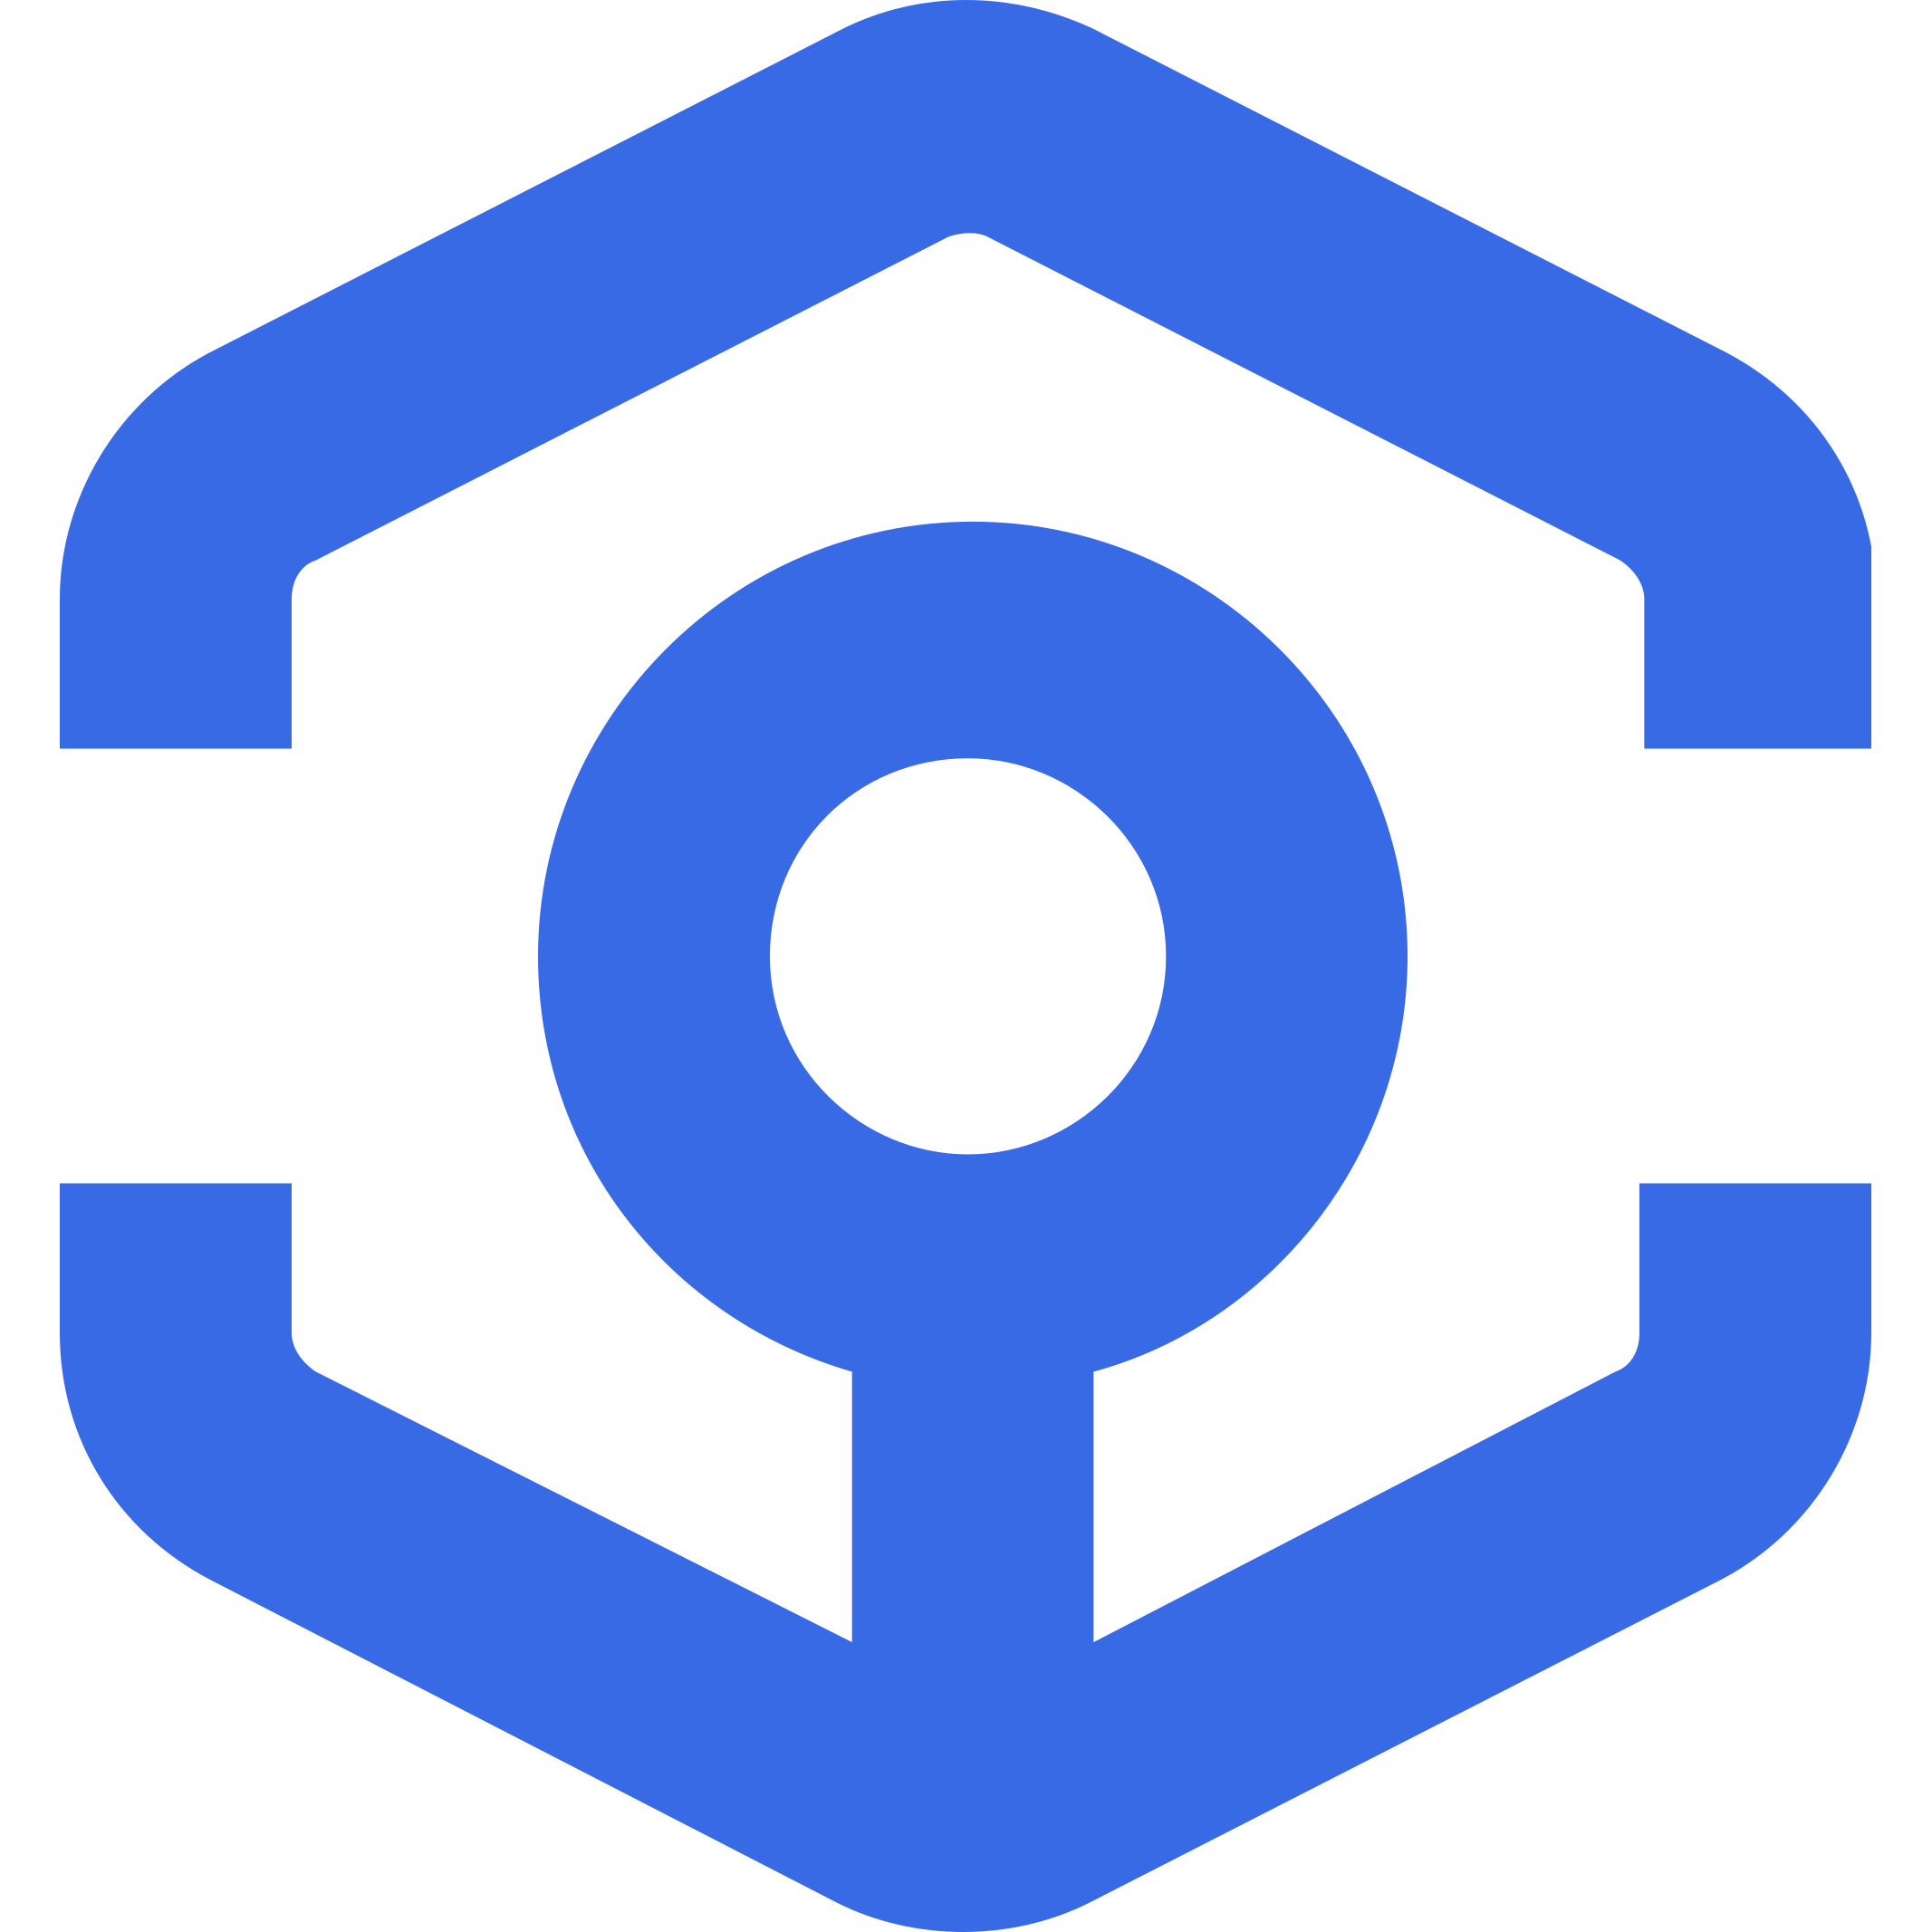 Ankr (ANKR) Logo .SVG and .PNG Files Download